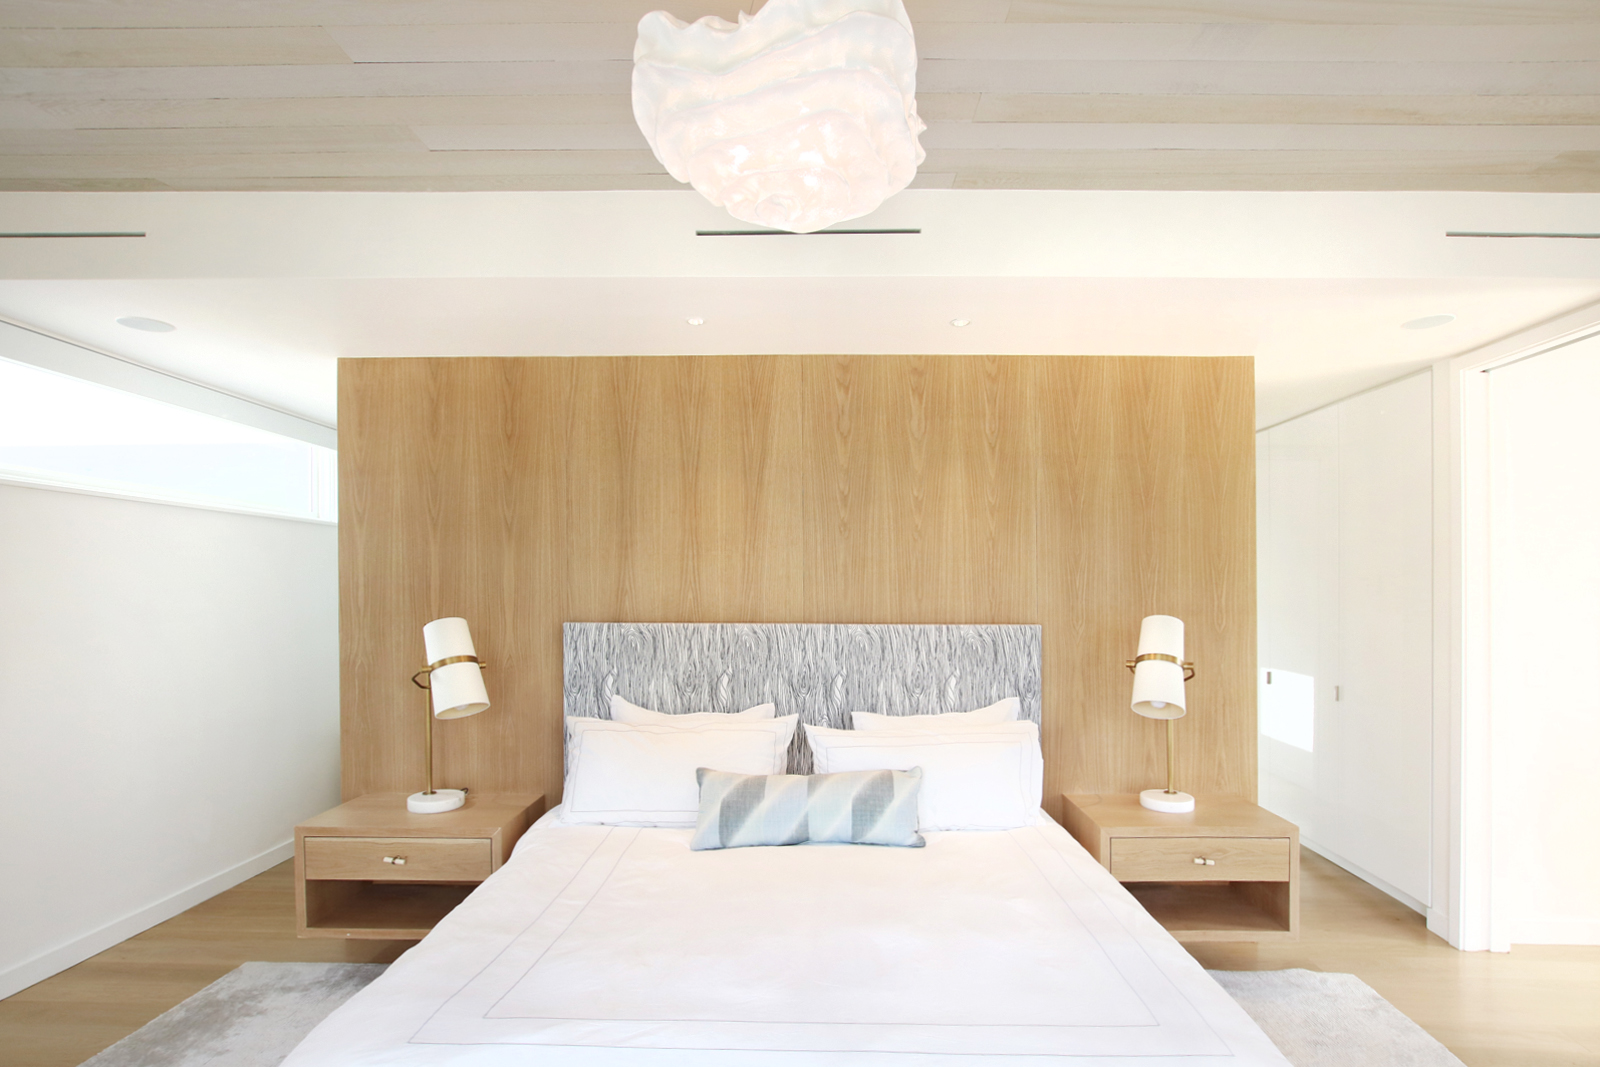 15-re4a-resolution-4-architecture-modern-modular-prefab-bridgehampton house-interior-master-bed-room.jpg